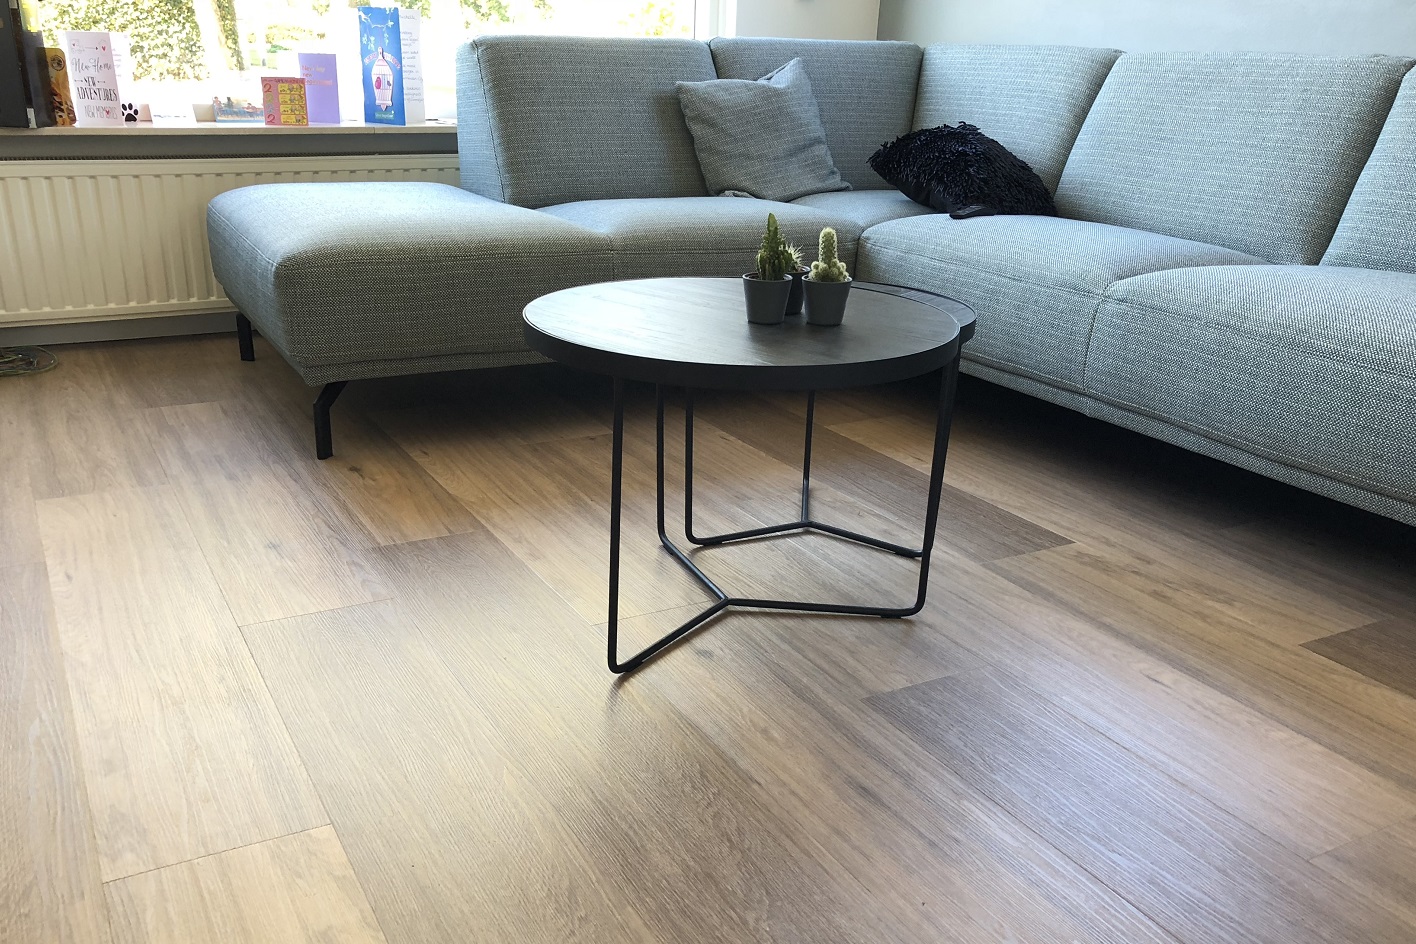 LVT flooring mimics the look of real wood, ceramic or stone flooring